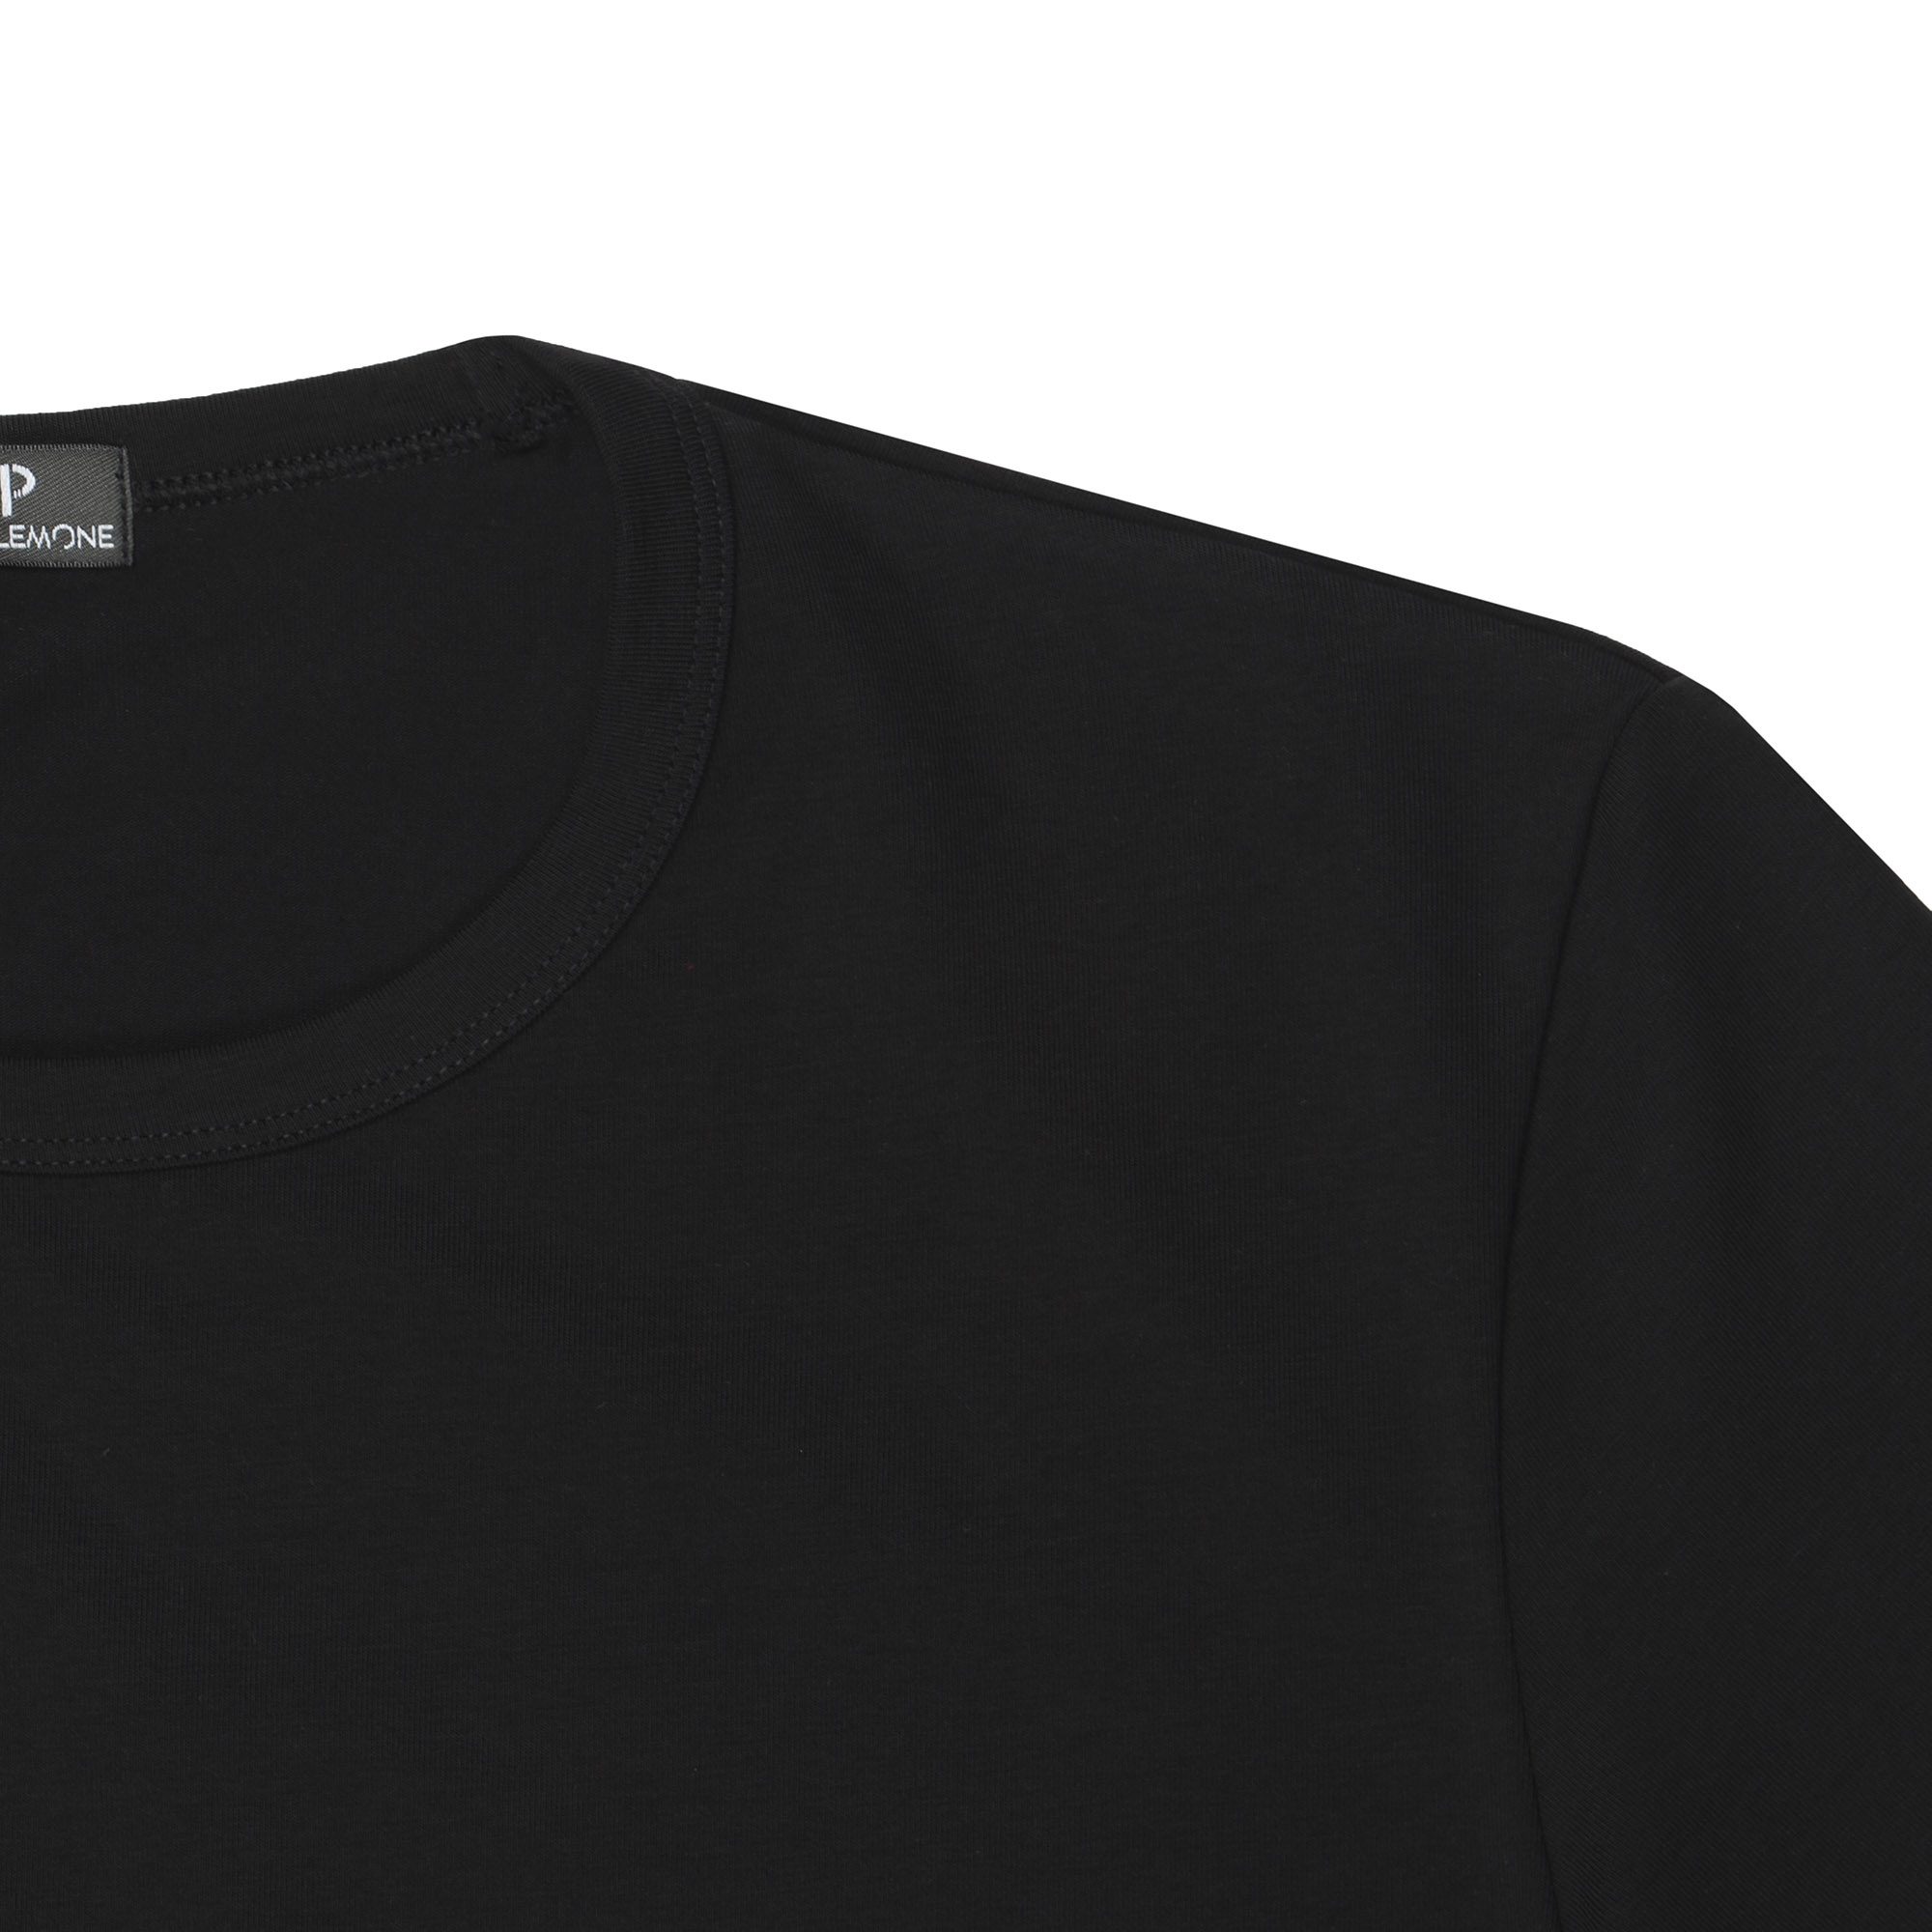 Мужская футболка Pantelemone MF-914 48 черная, цвет черный, размер 48 - фото 2